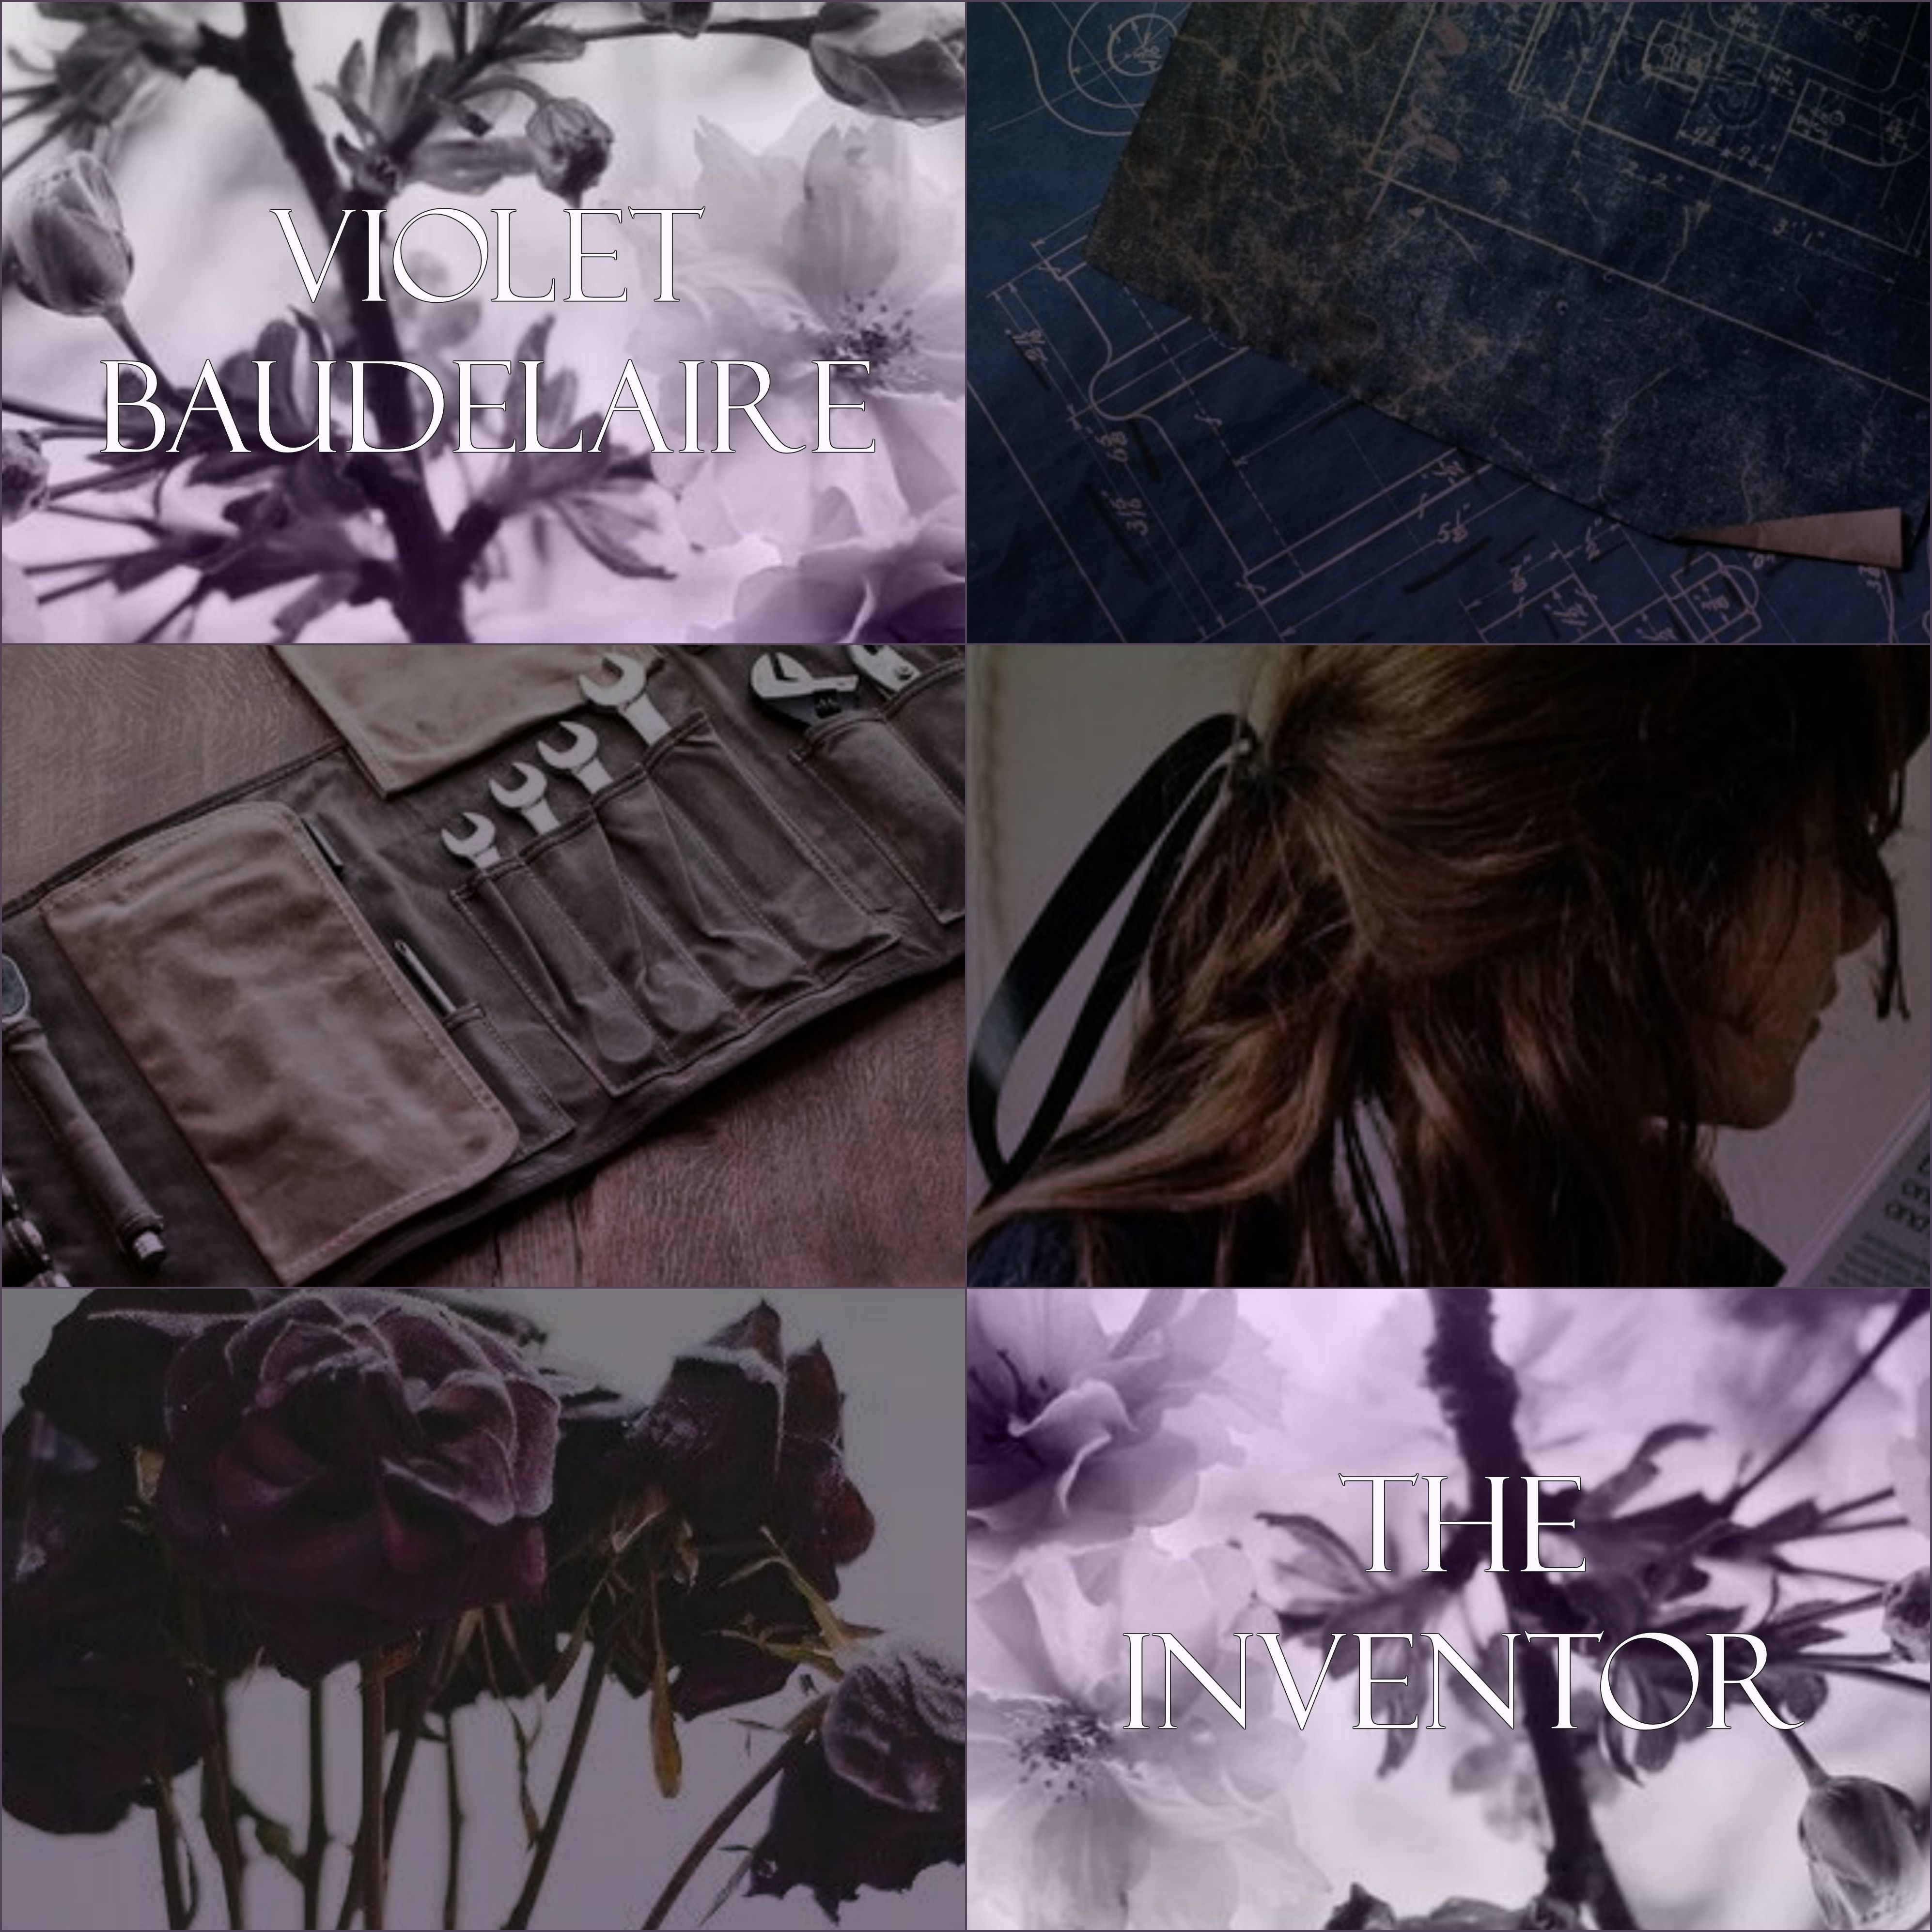 Violet Baudelaire #violet #baudelaire #aesthetic #lemony #smicket. A series of unfortunate events, Violet aesthetic, Event